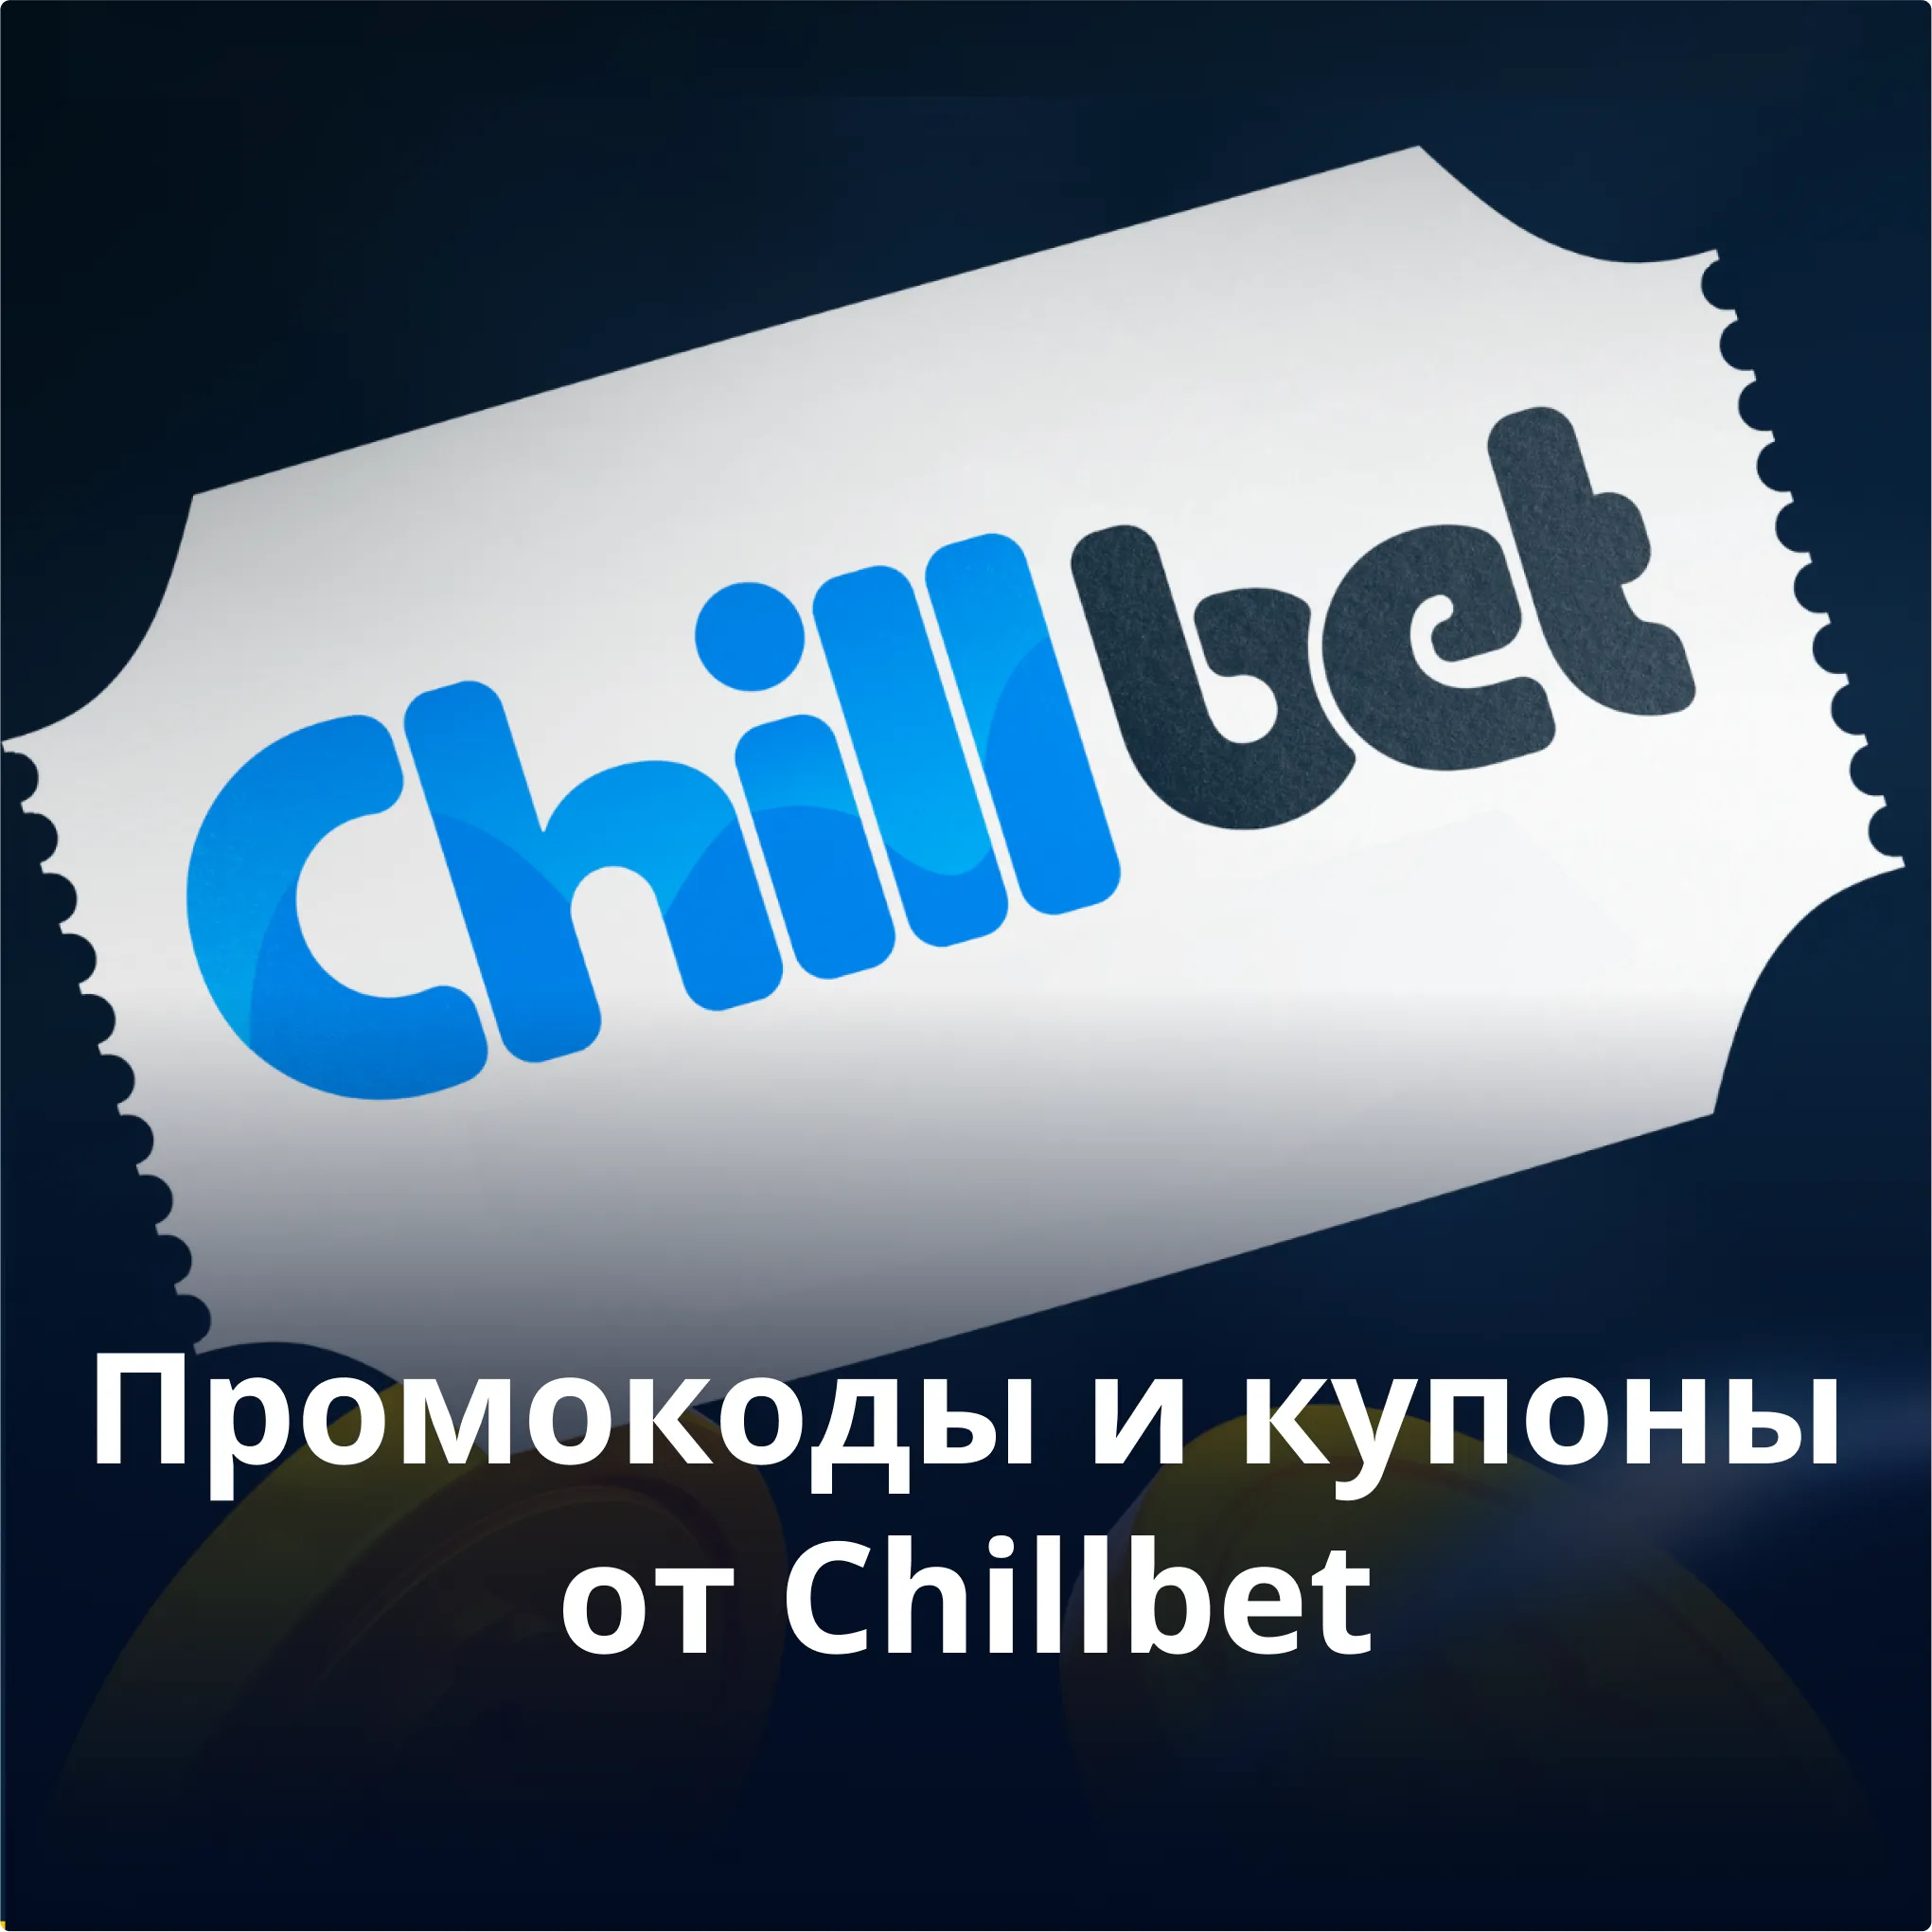 Chillbet